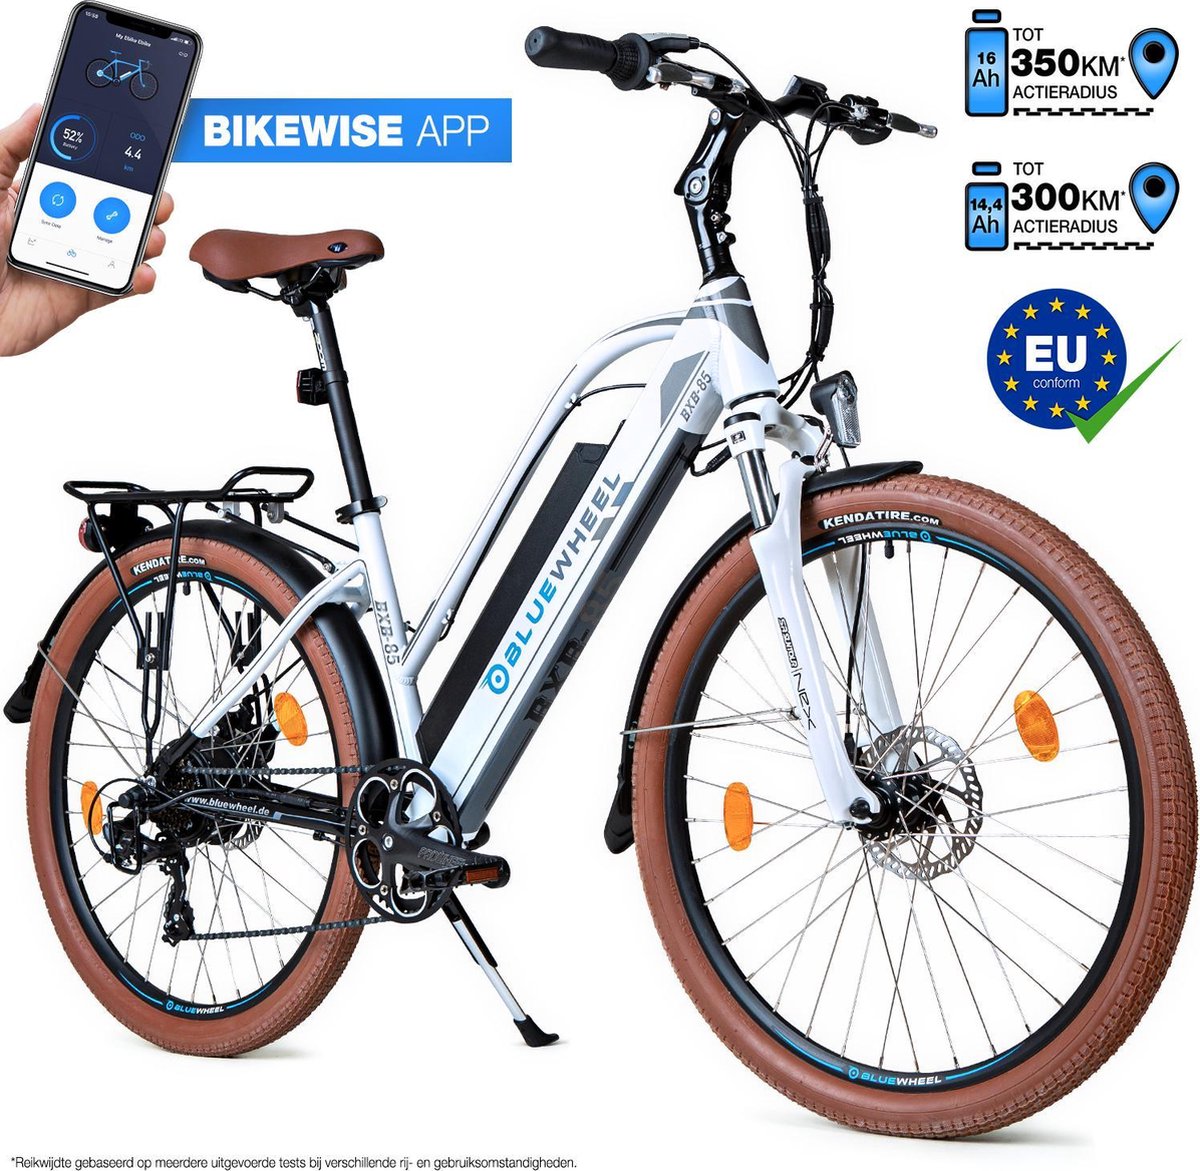 Bluewheel 26 inch e bike EU conform lithium ionen accu 7 Shi o versnellingen elektrische fiets BXB85